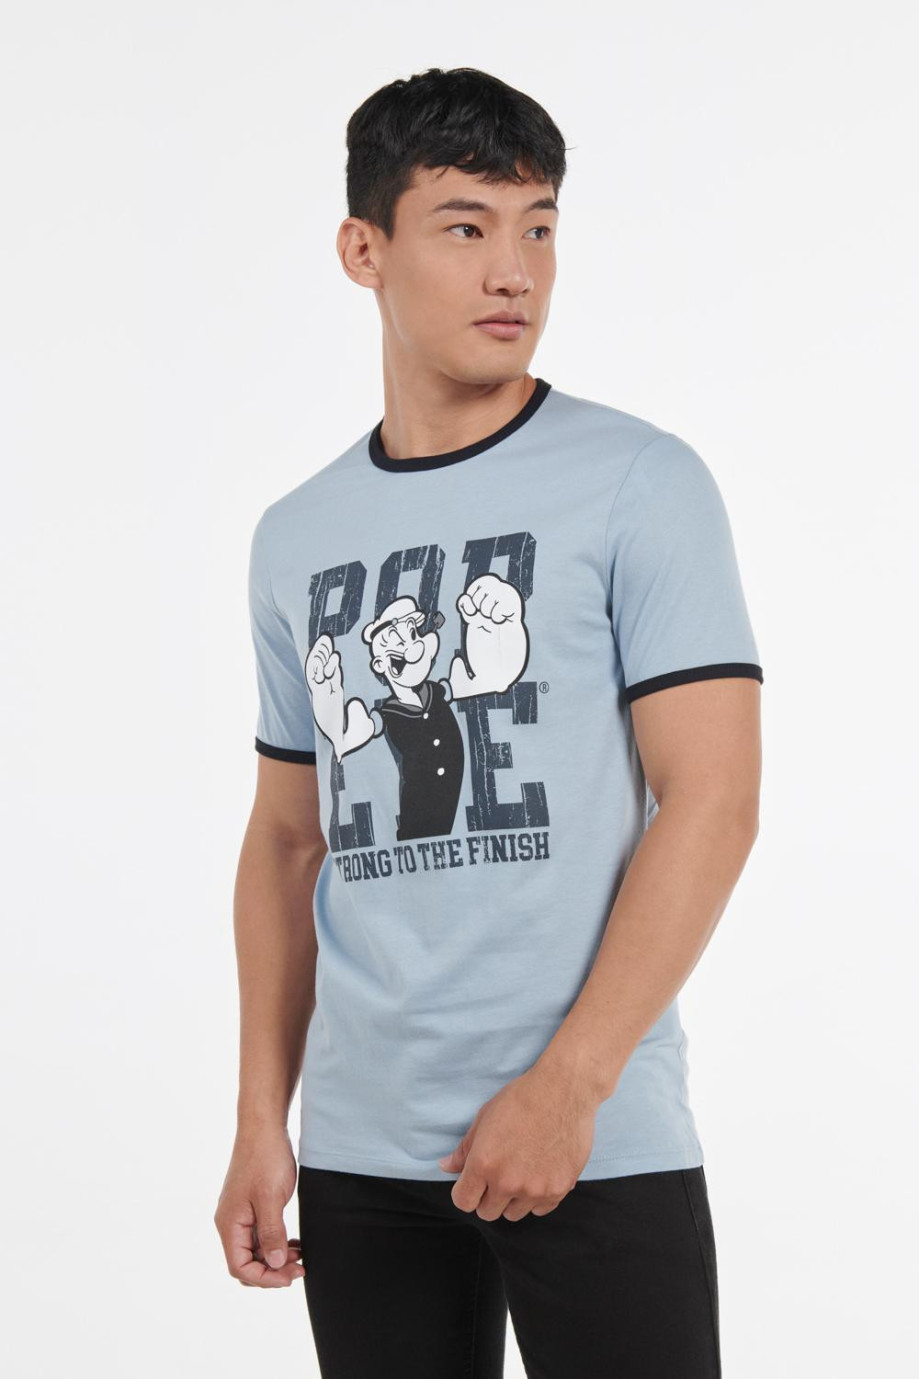 Camiseta azul clara con manga corta, contrastes y motivo de Popeye